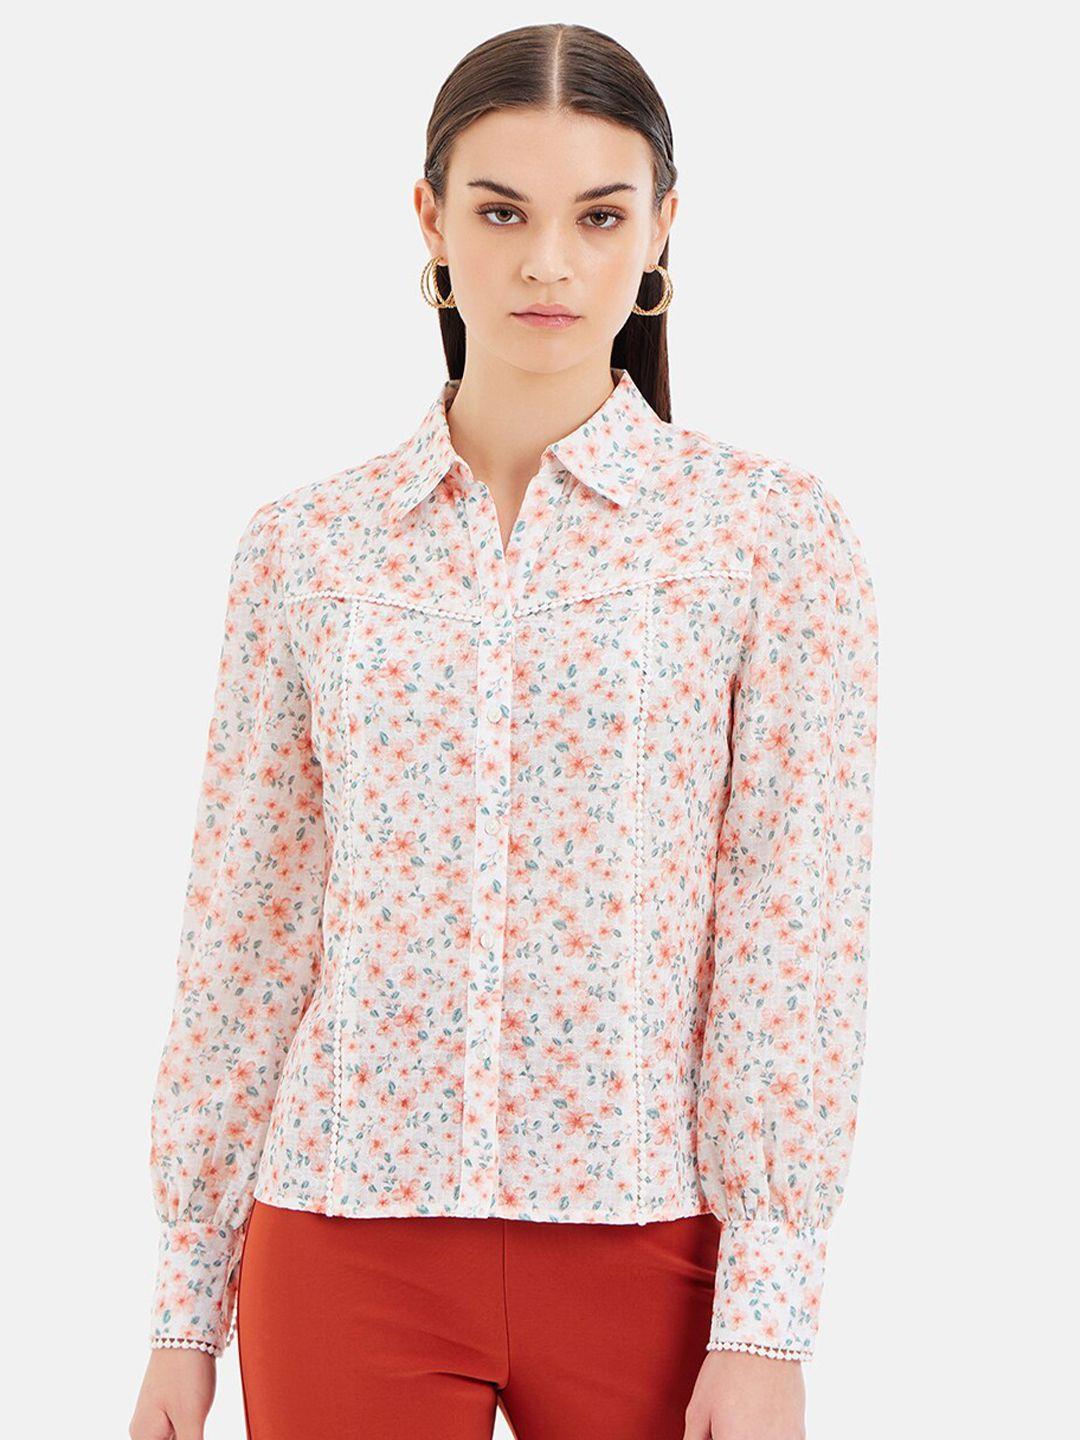 kazo standard floral printed spread collar long sleeves casual shirt